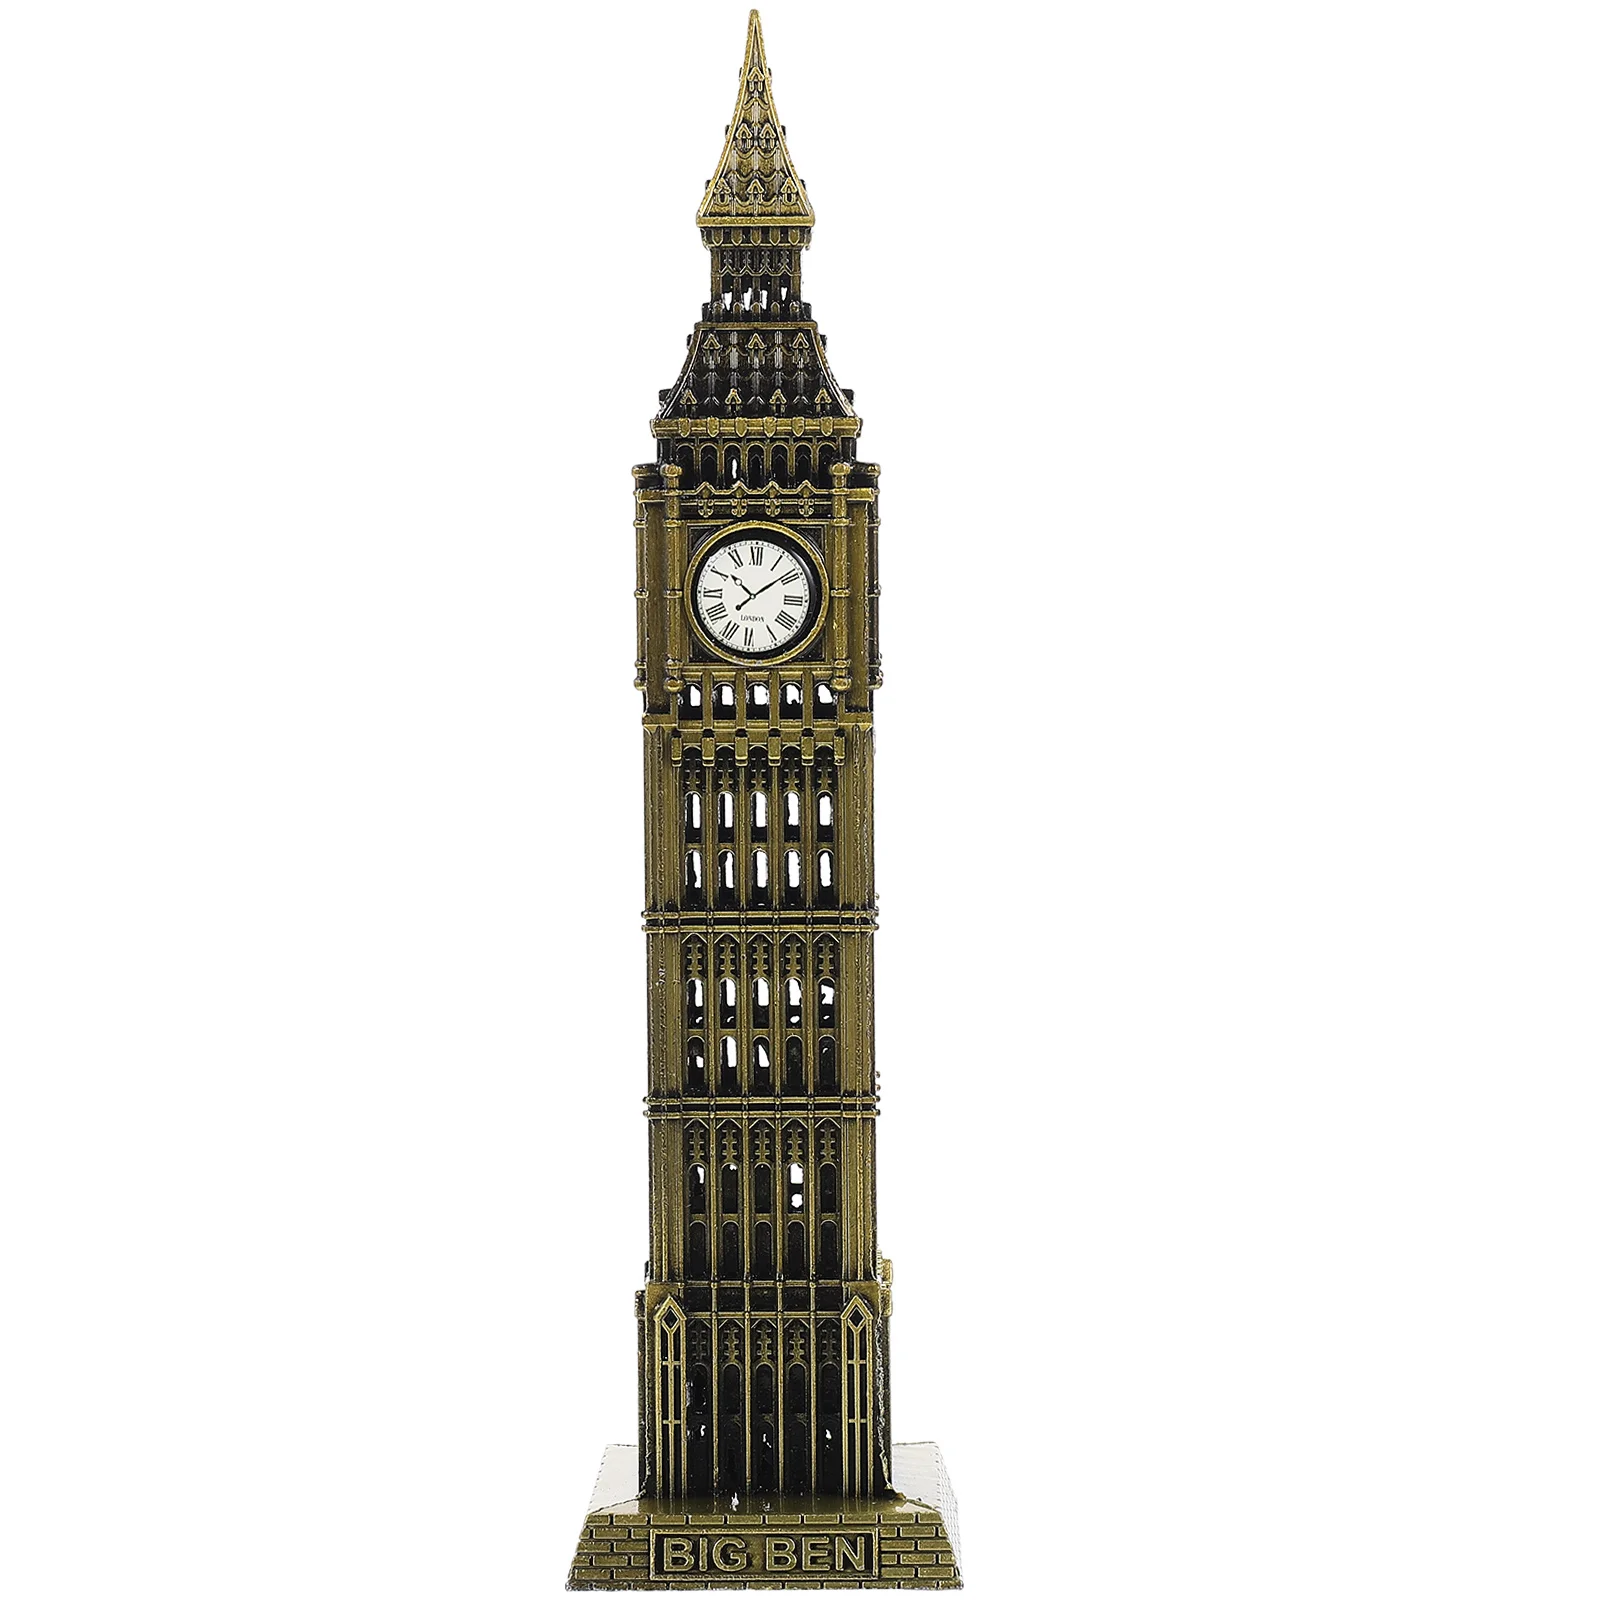 

Big Ben Model London Building Statue Architectural Statues Metal Tower Sculpture Figurine Sculptures State Famous Landmark